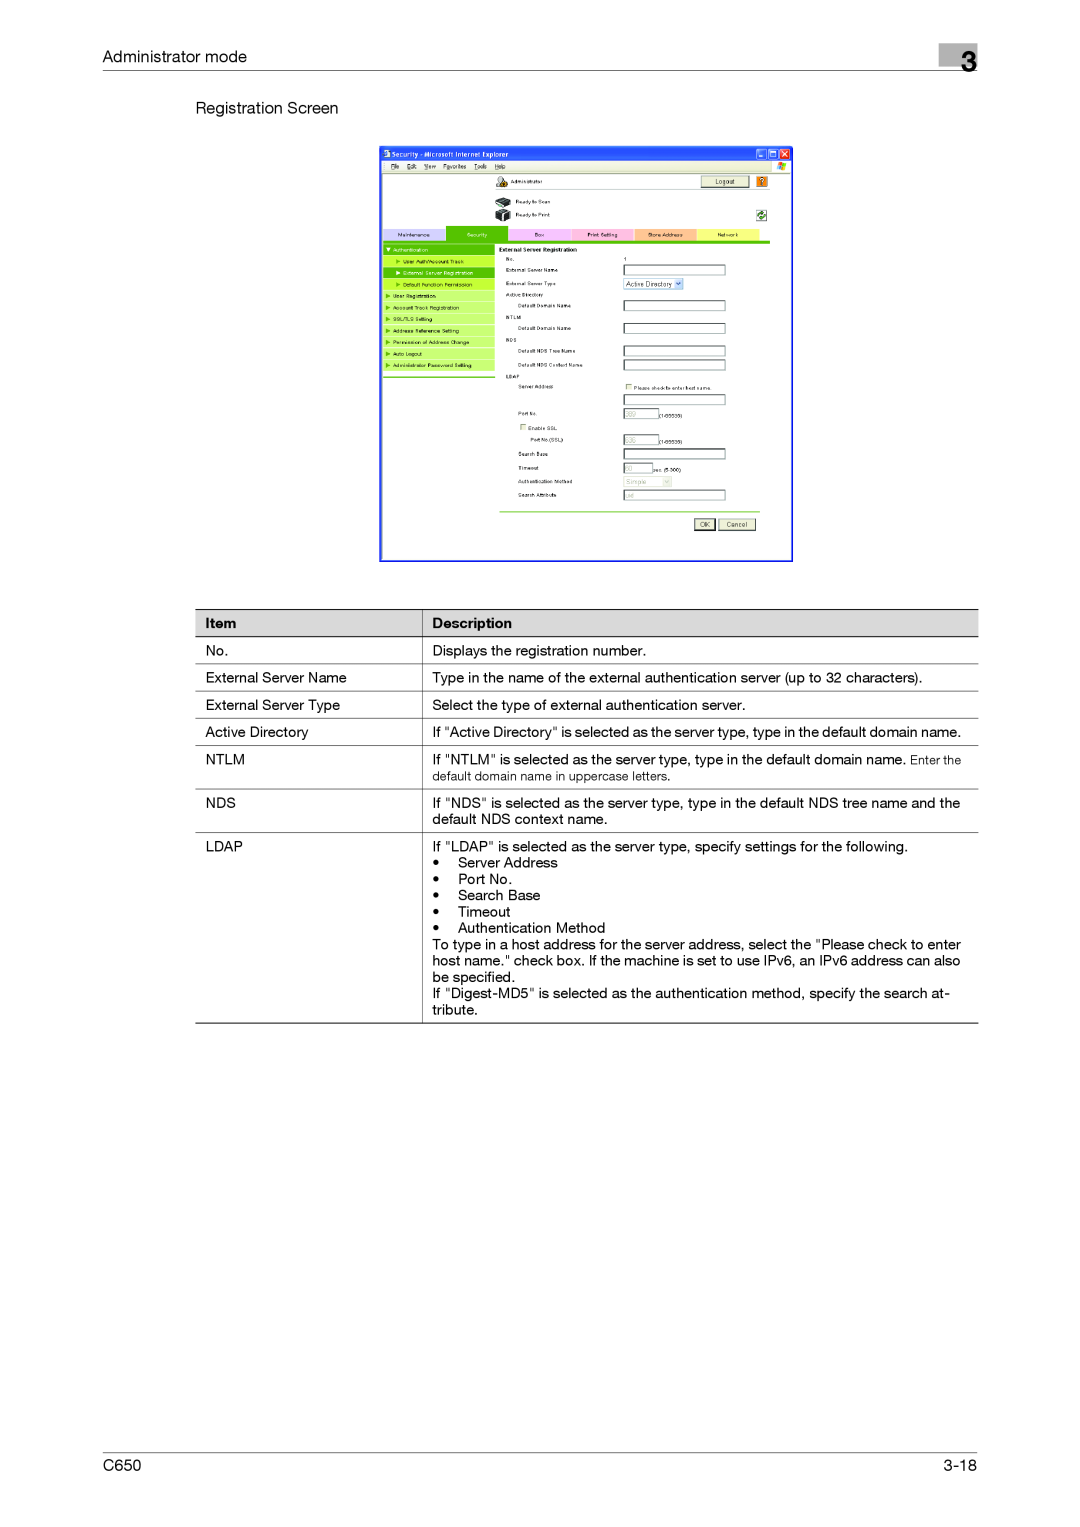 Konica Minolta C650 manual Administrator mode Registration Screen, 3-18 